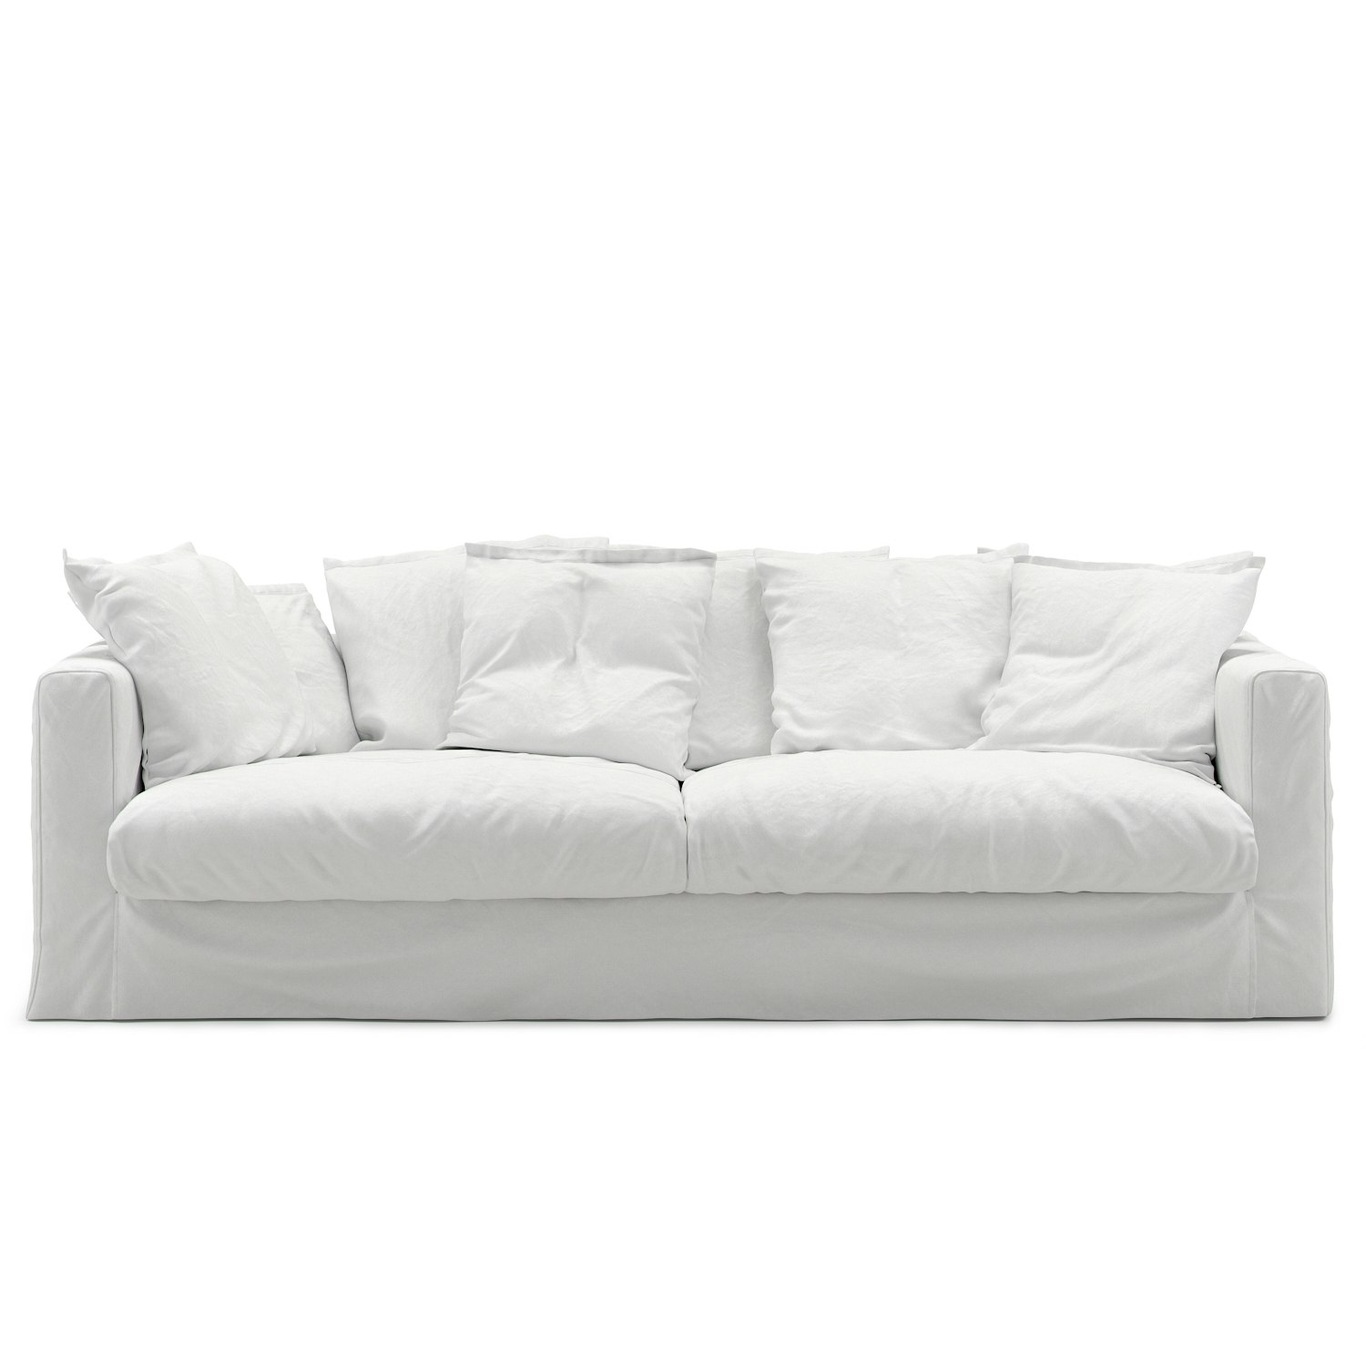 https://royaldesign.com/image/11/decotique-le-grand-air-3-seater-sofa-cotton-7?w=800&quality=80